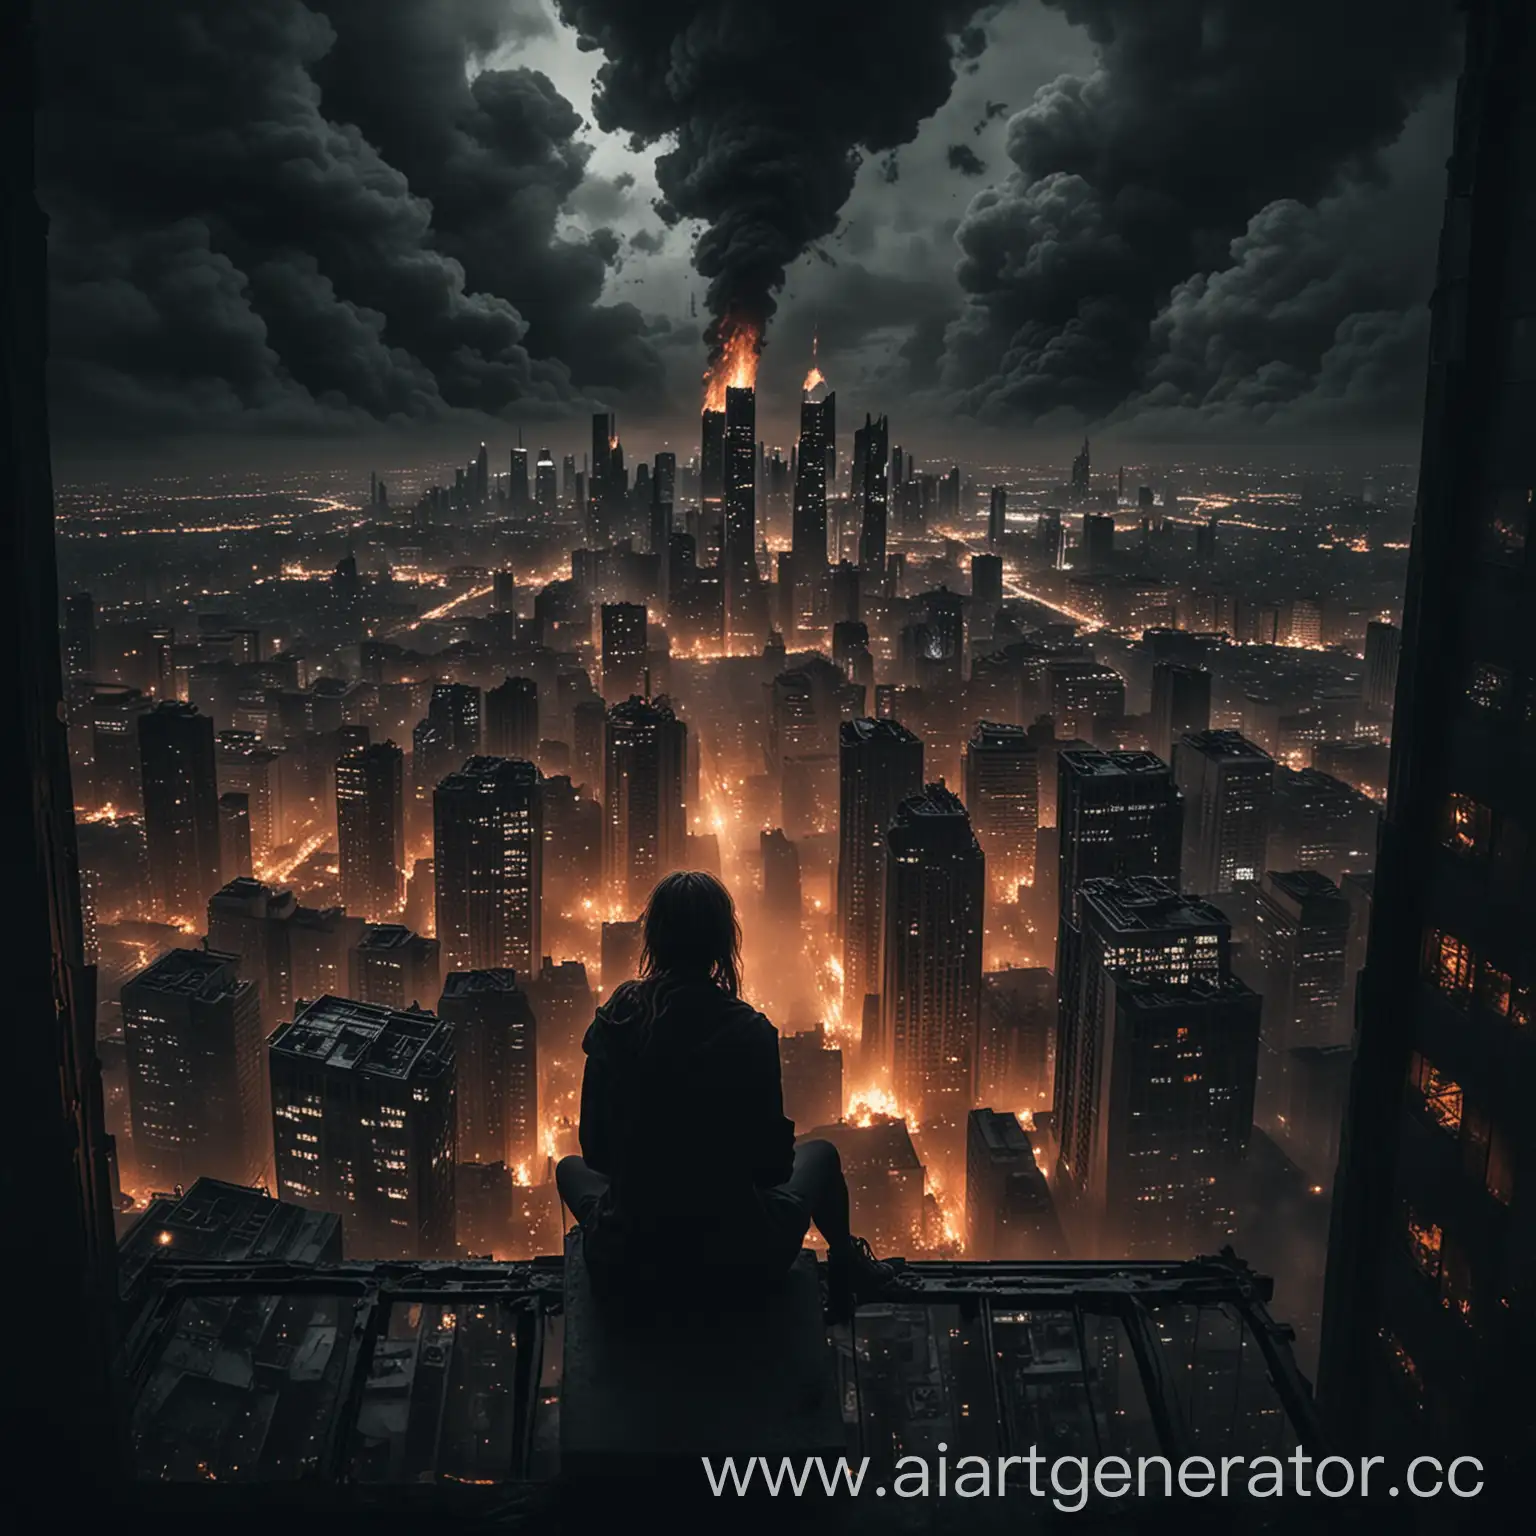 Gothic-Apocalypse-Lone-Figure-Contemplates-City-in-Flames-from-Skyscraper